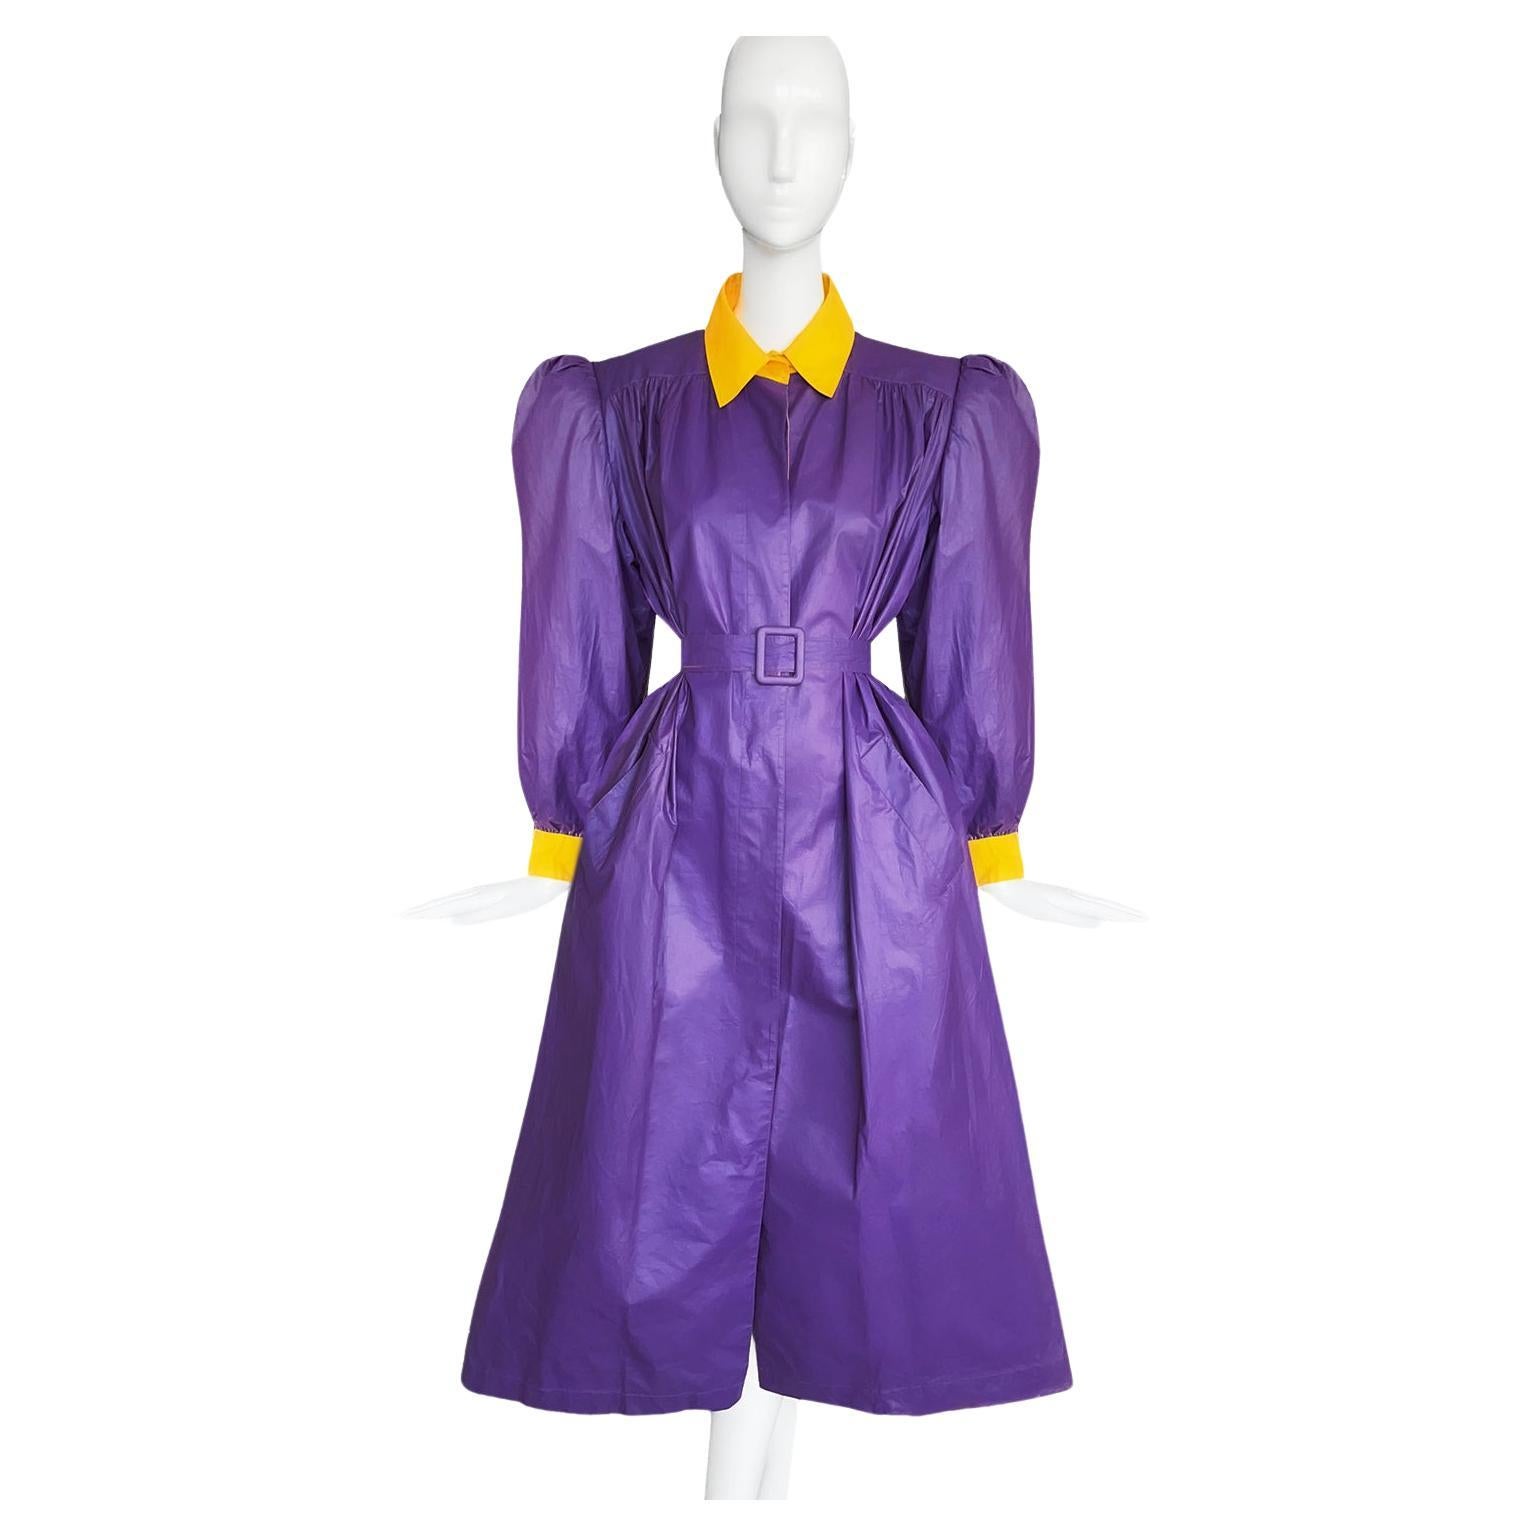 Rare Valentino Raincoat Vintage Trench Coat Purple Violet Yellow For Sale